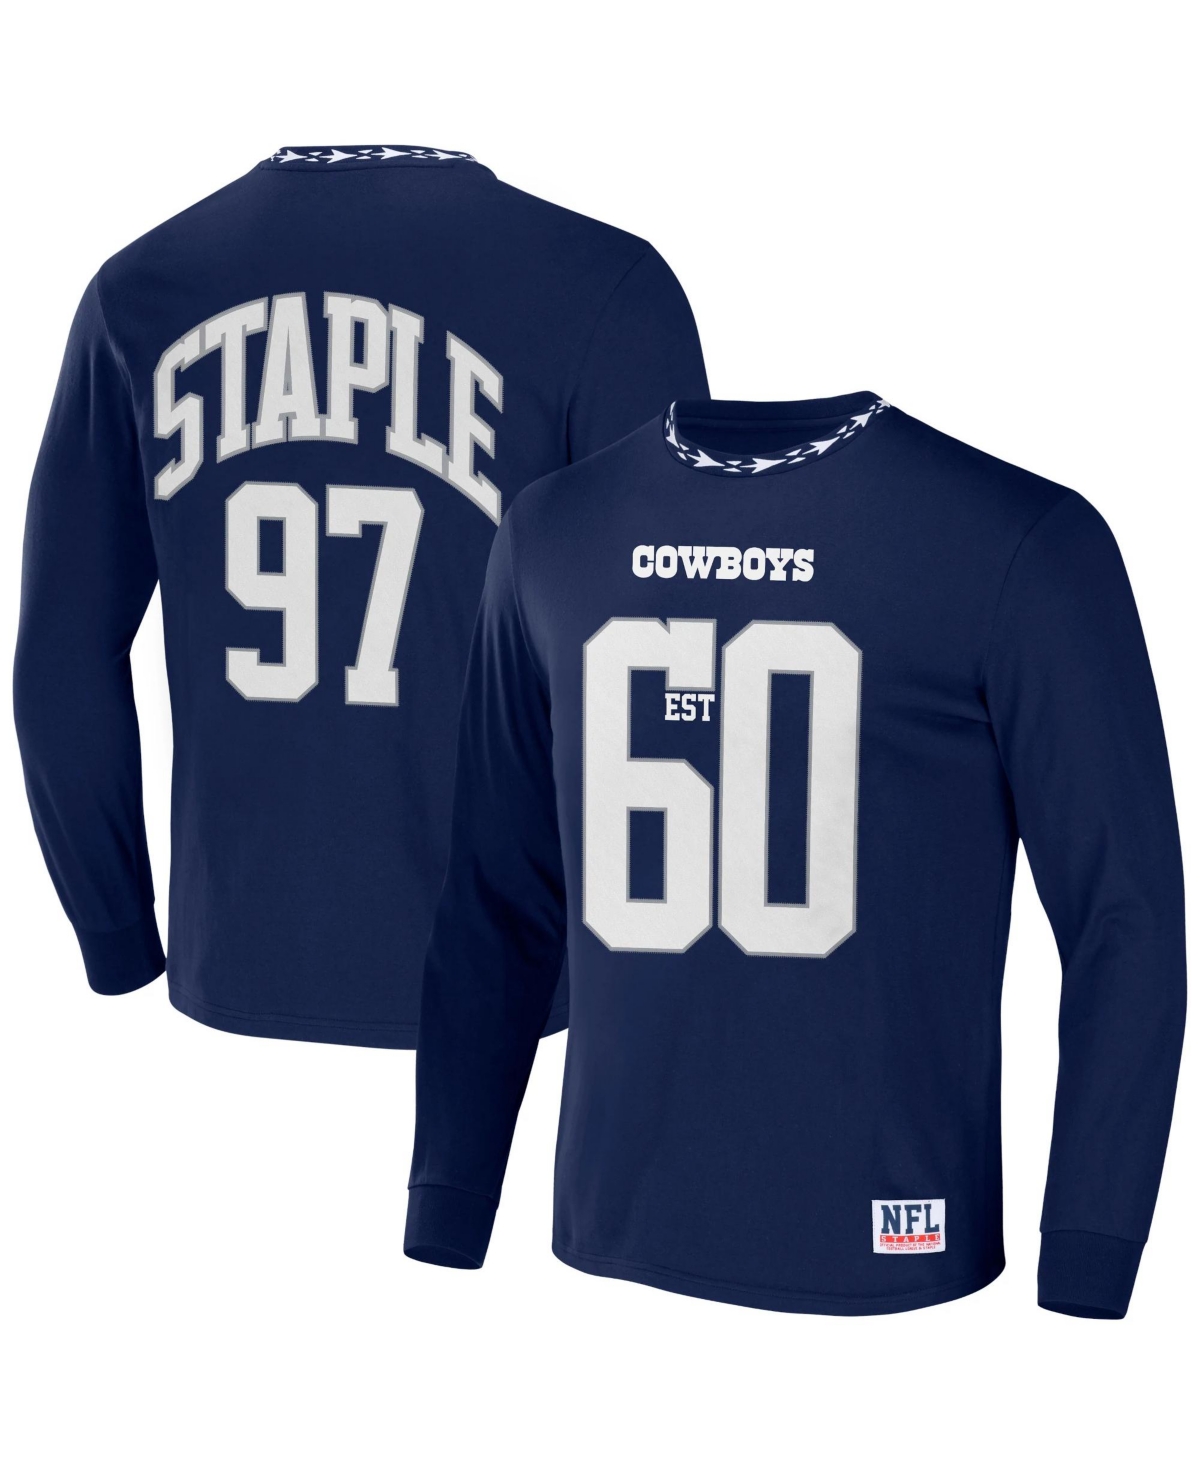 Men's Nfl X Staple Navy Dallas Cowboys Core Long Sleeve Jersey Style T-shirt - Navy